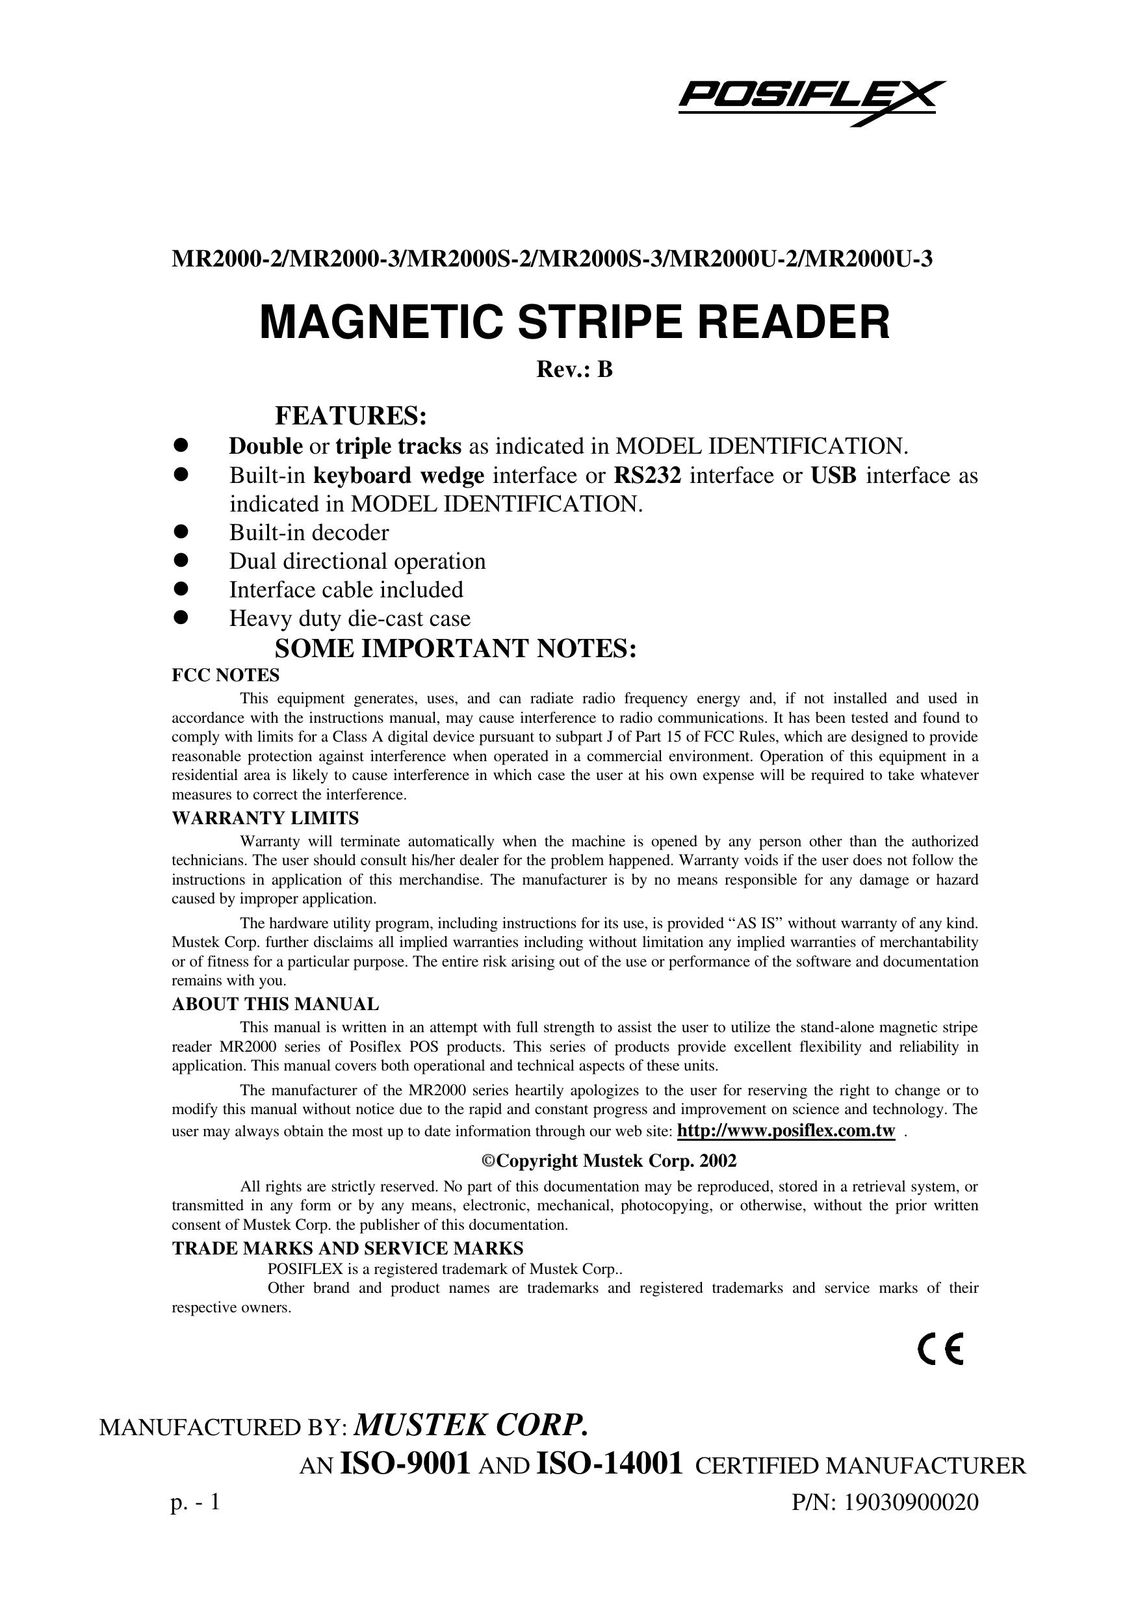 POSIFLEX Business Machines MR2000-2 Barcode Reader User Manual